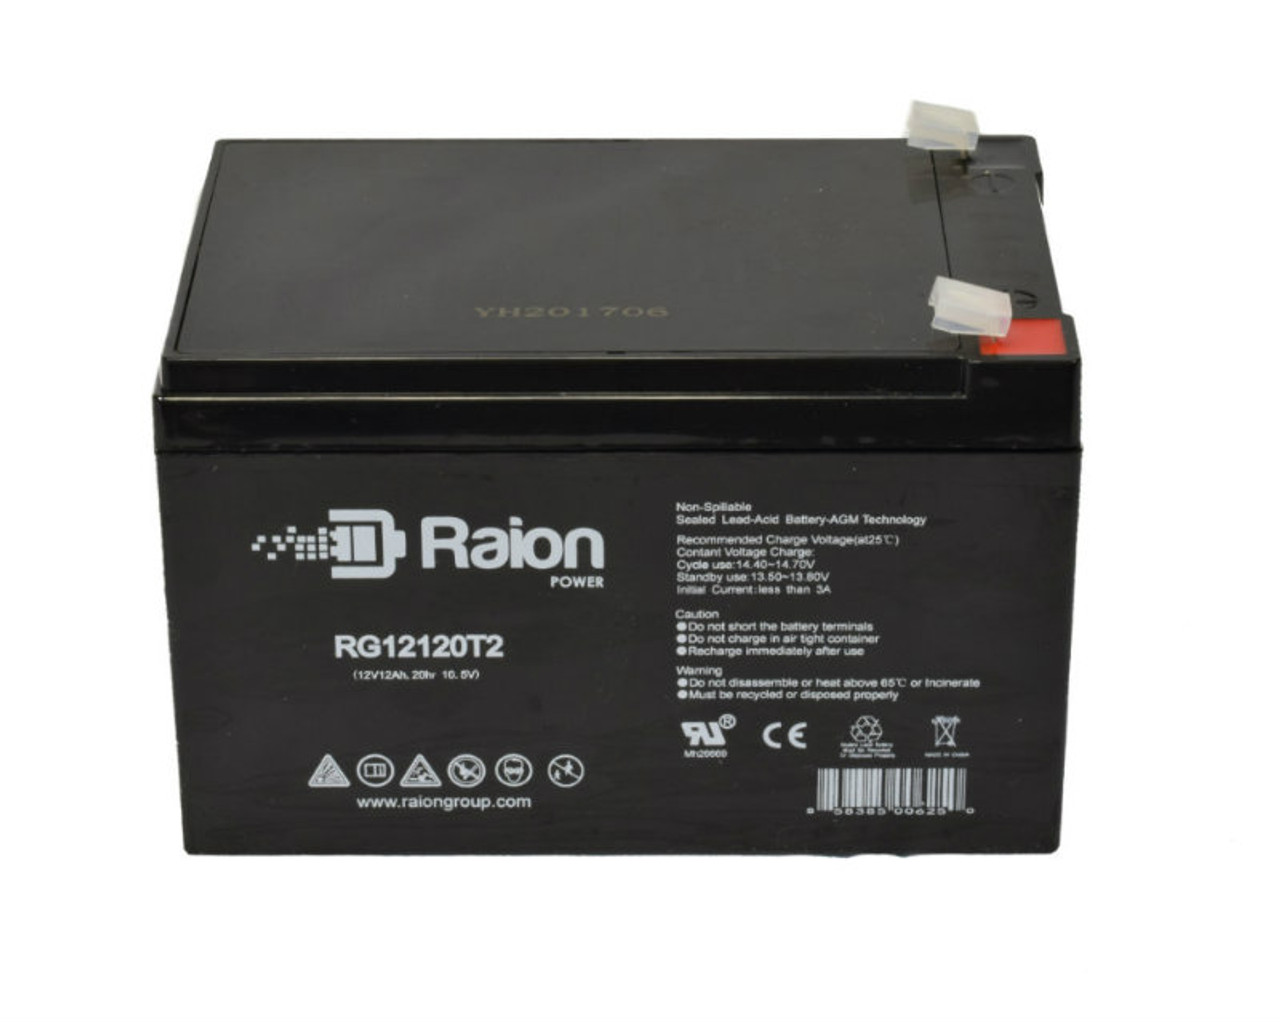 Raion Power RG12120T2 SLA Battery for EV Rider Transport Plus Folding